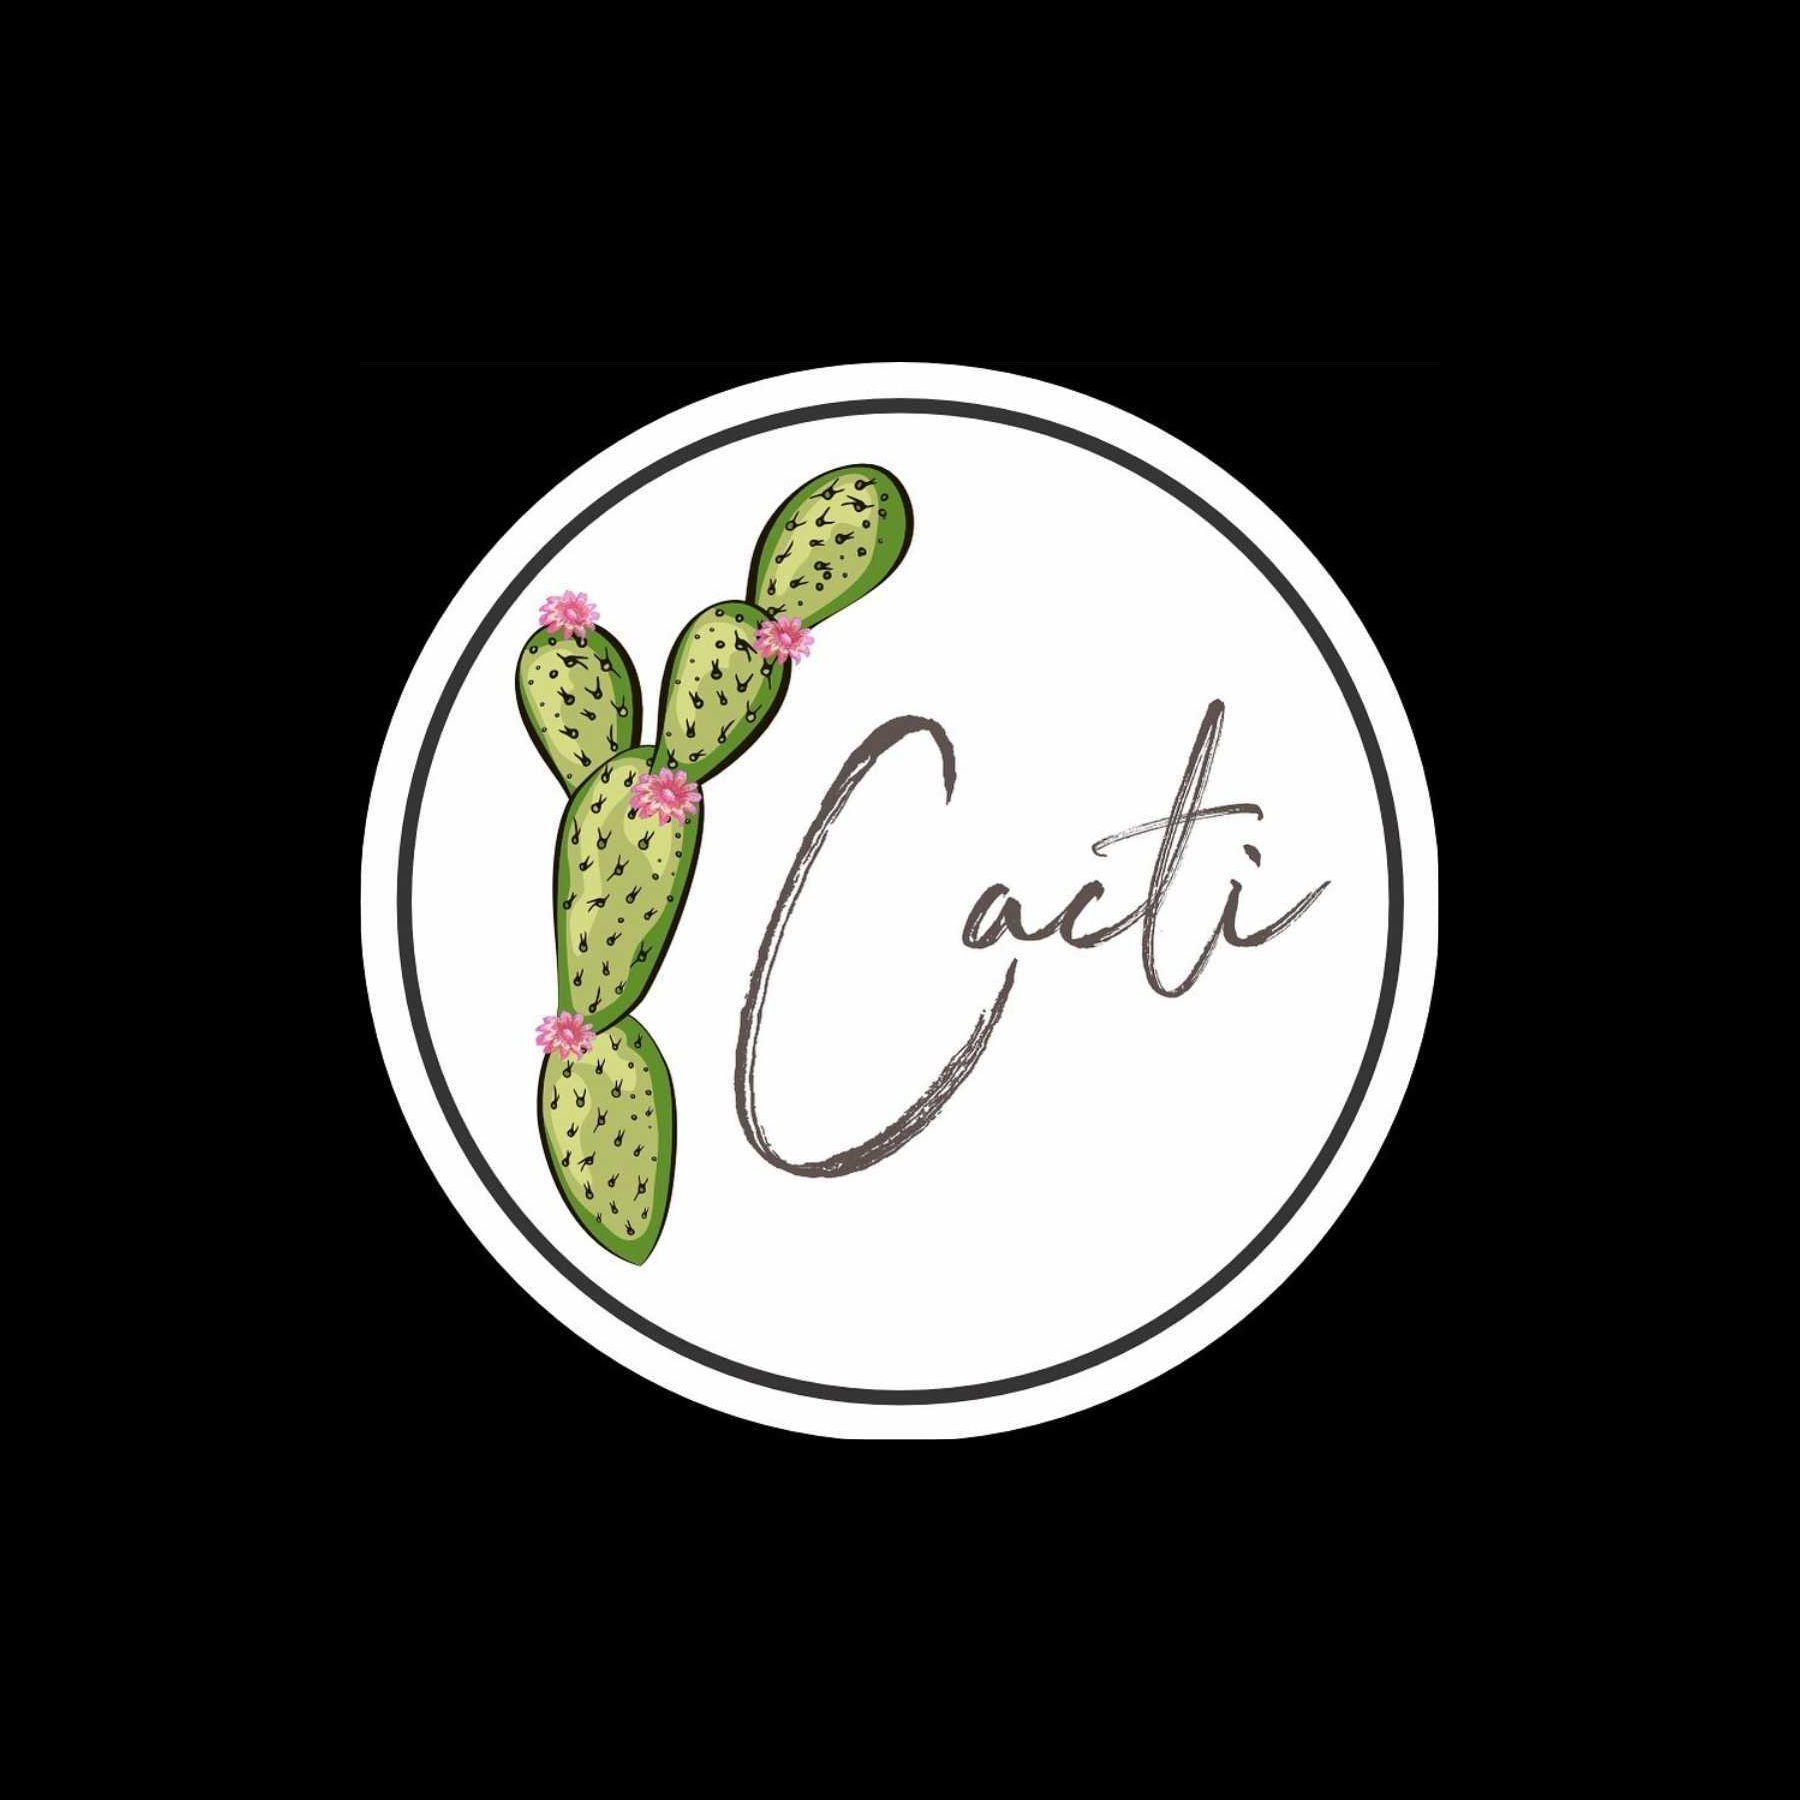 A photo of the Cacti logo 